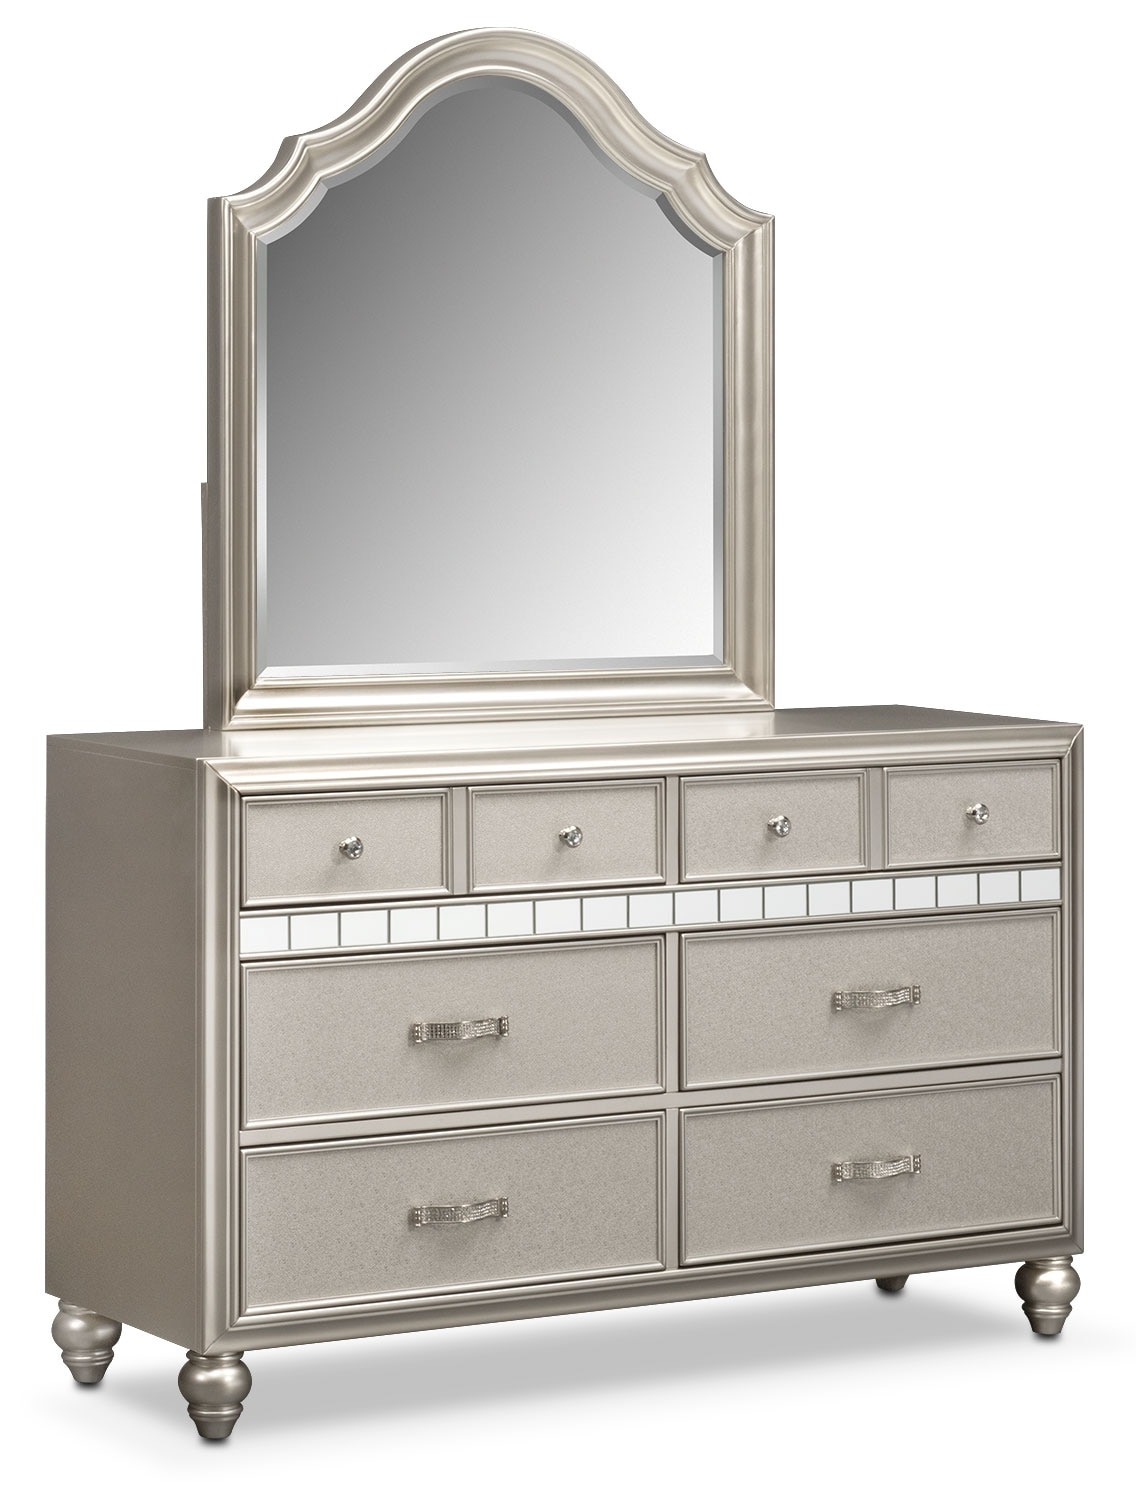 Serena Dresser And Mirror American, Dresser With A Mirror